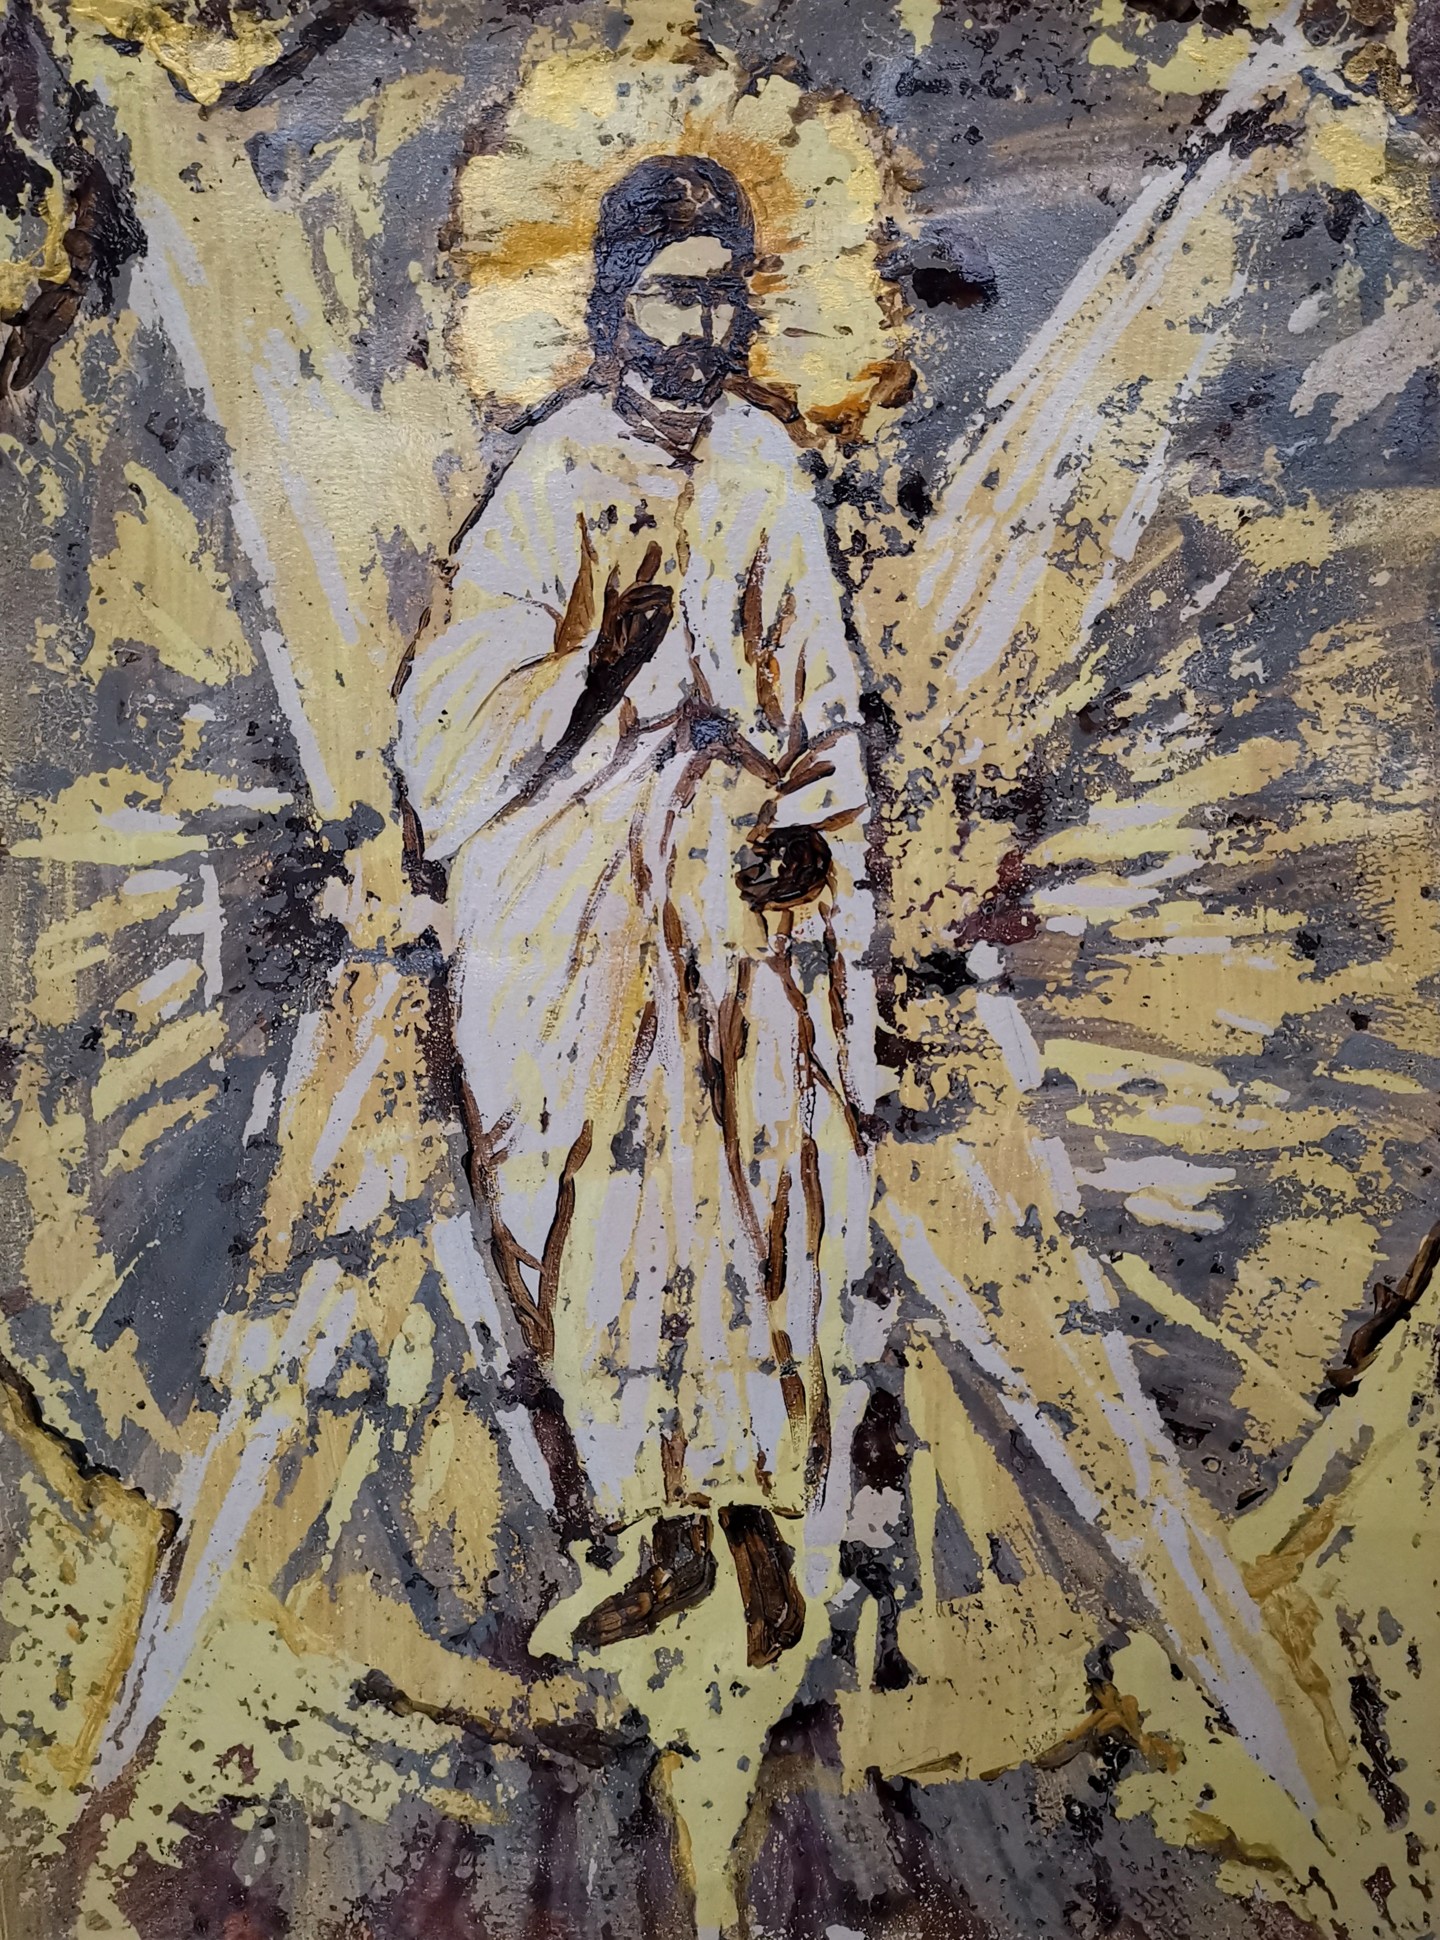 the transfiguration of jesus drawing